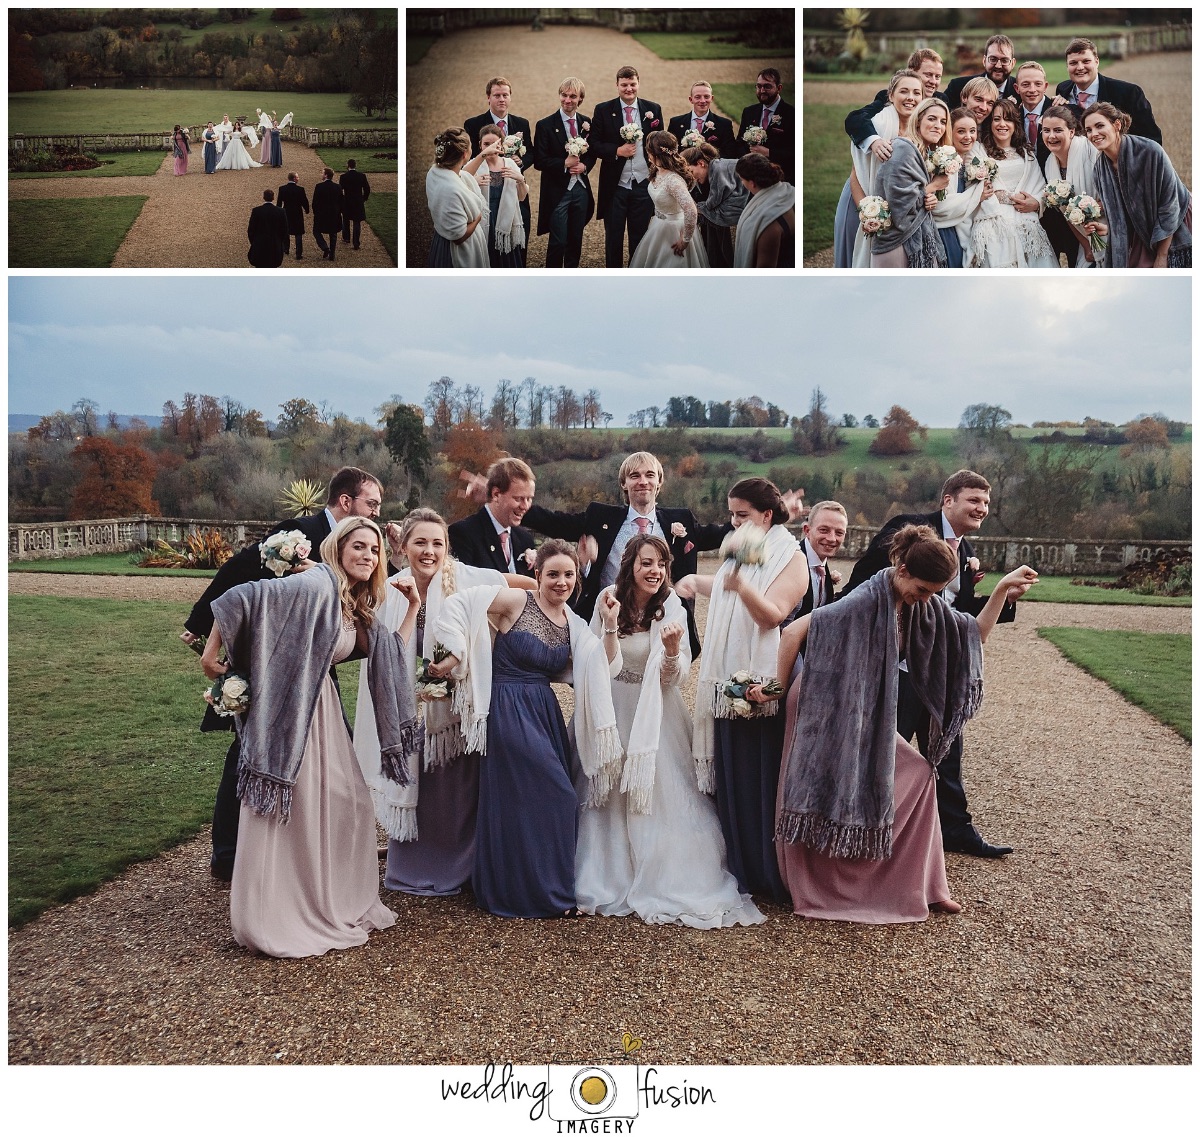 Combo photo/Video. Wedding Fusion Imagery.-Image-30